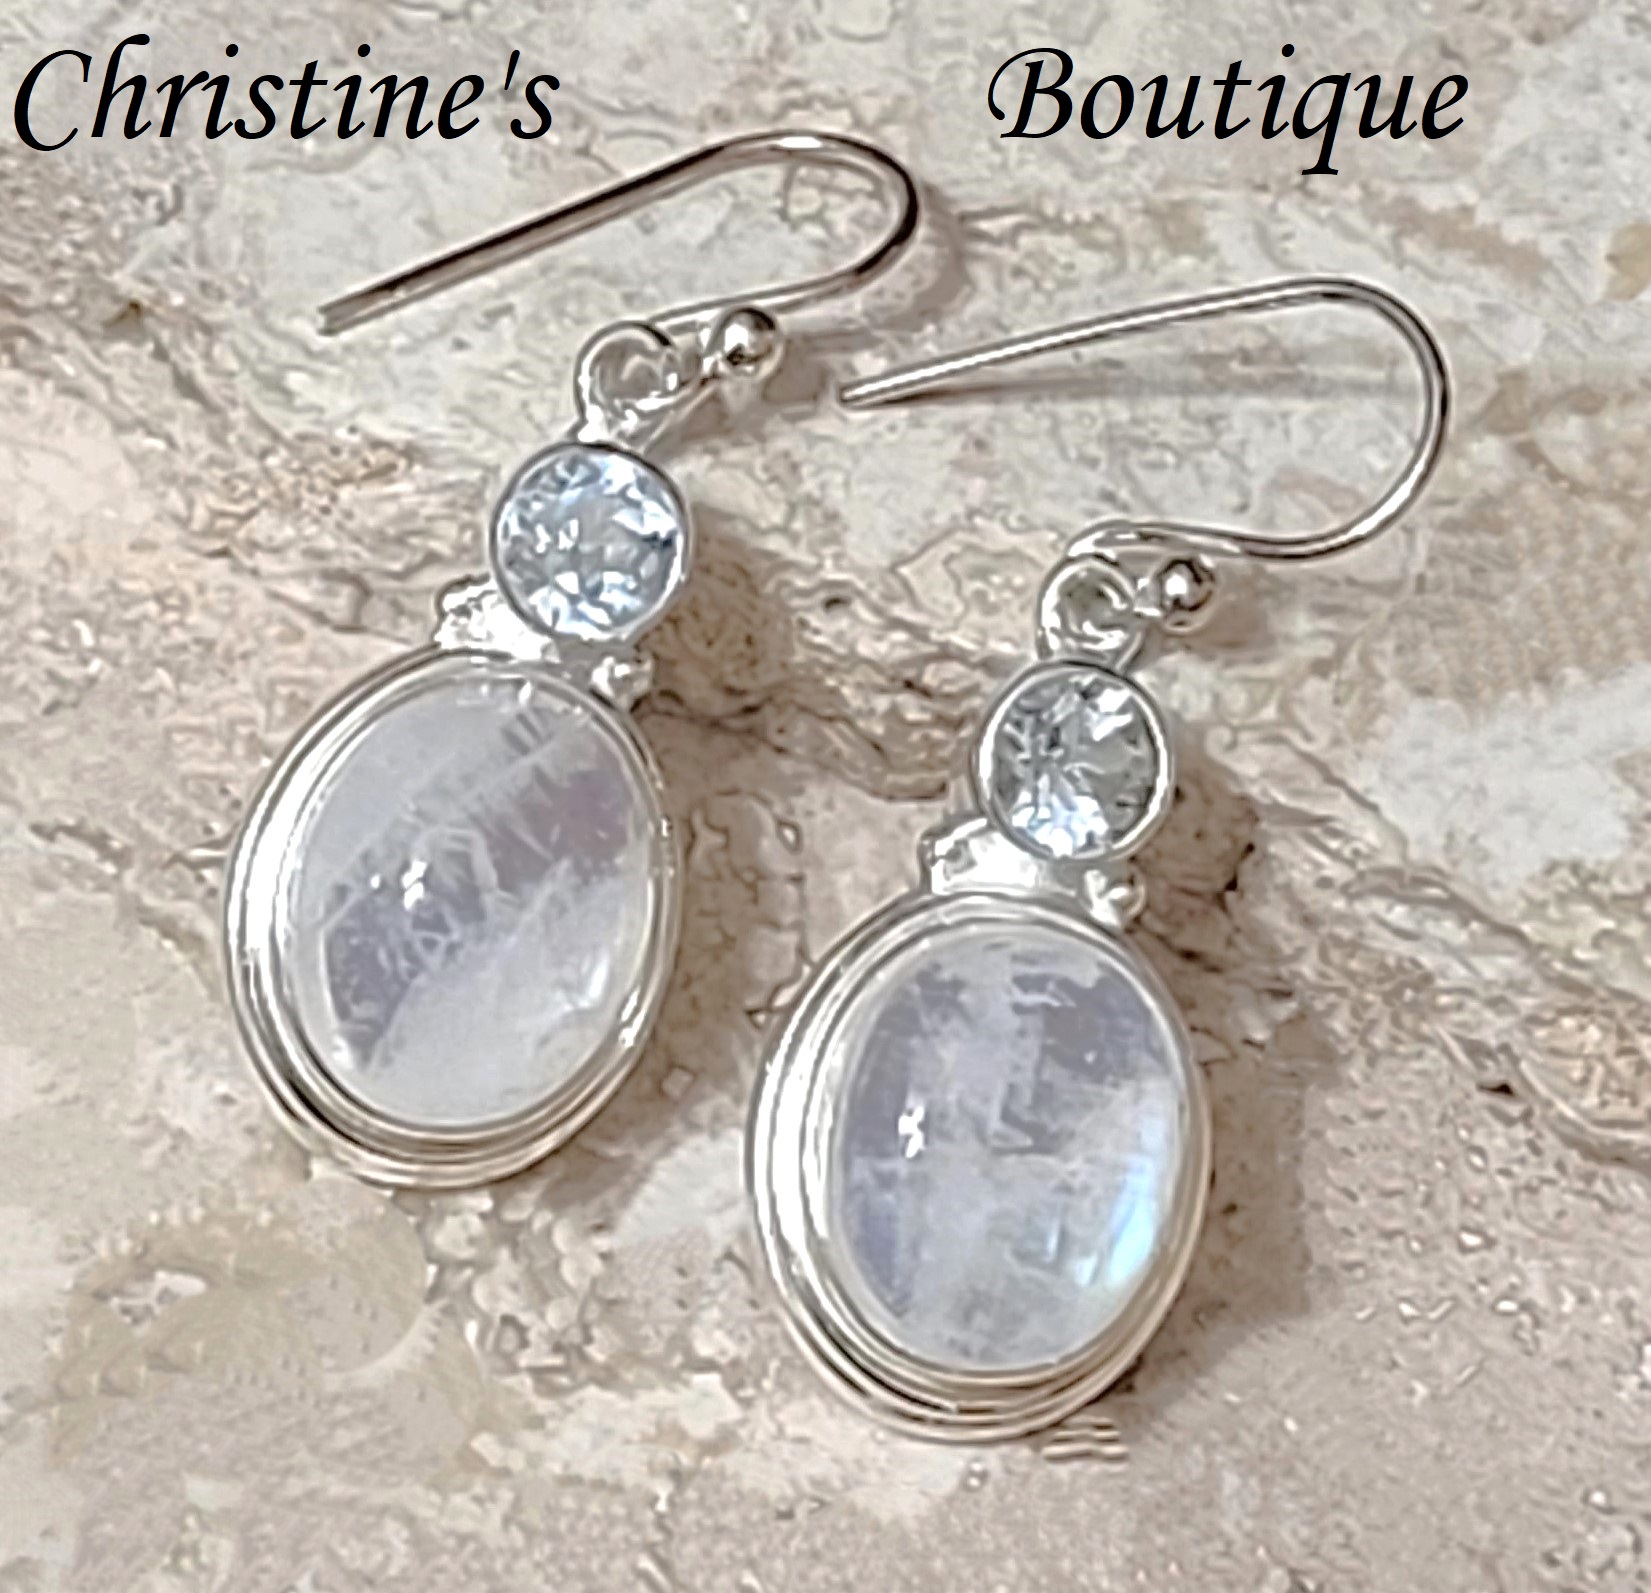 Moonstone earrings with blue topaz gemstone, 925 sterling silver earrings